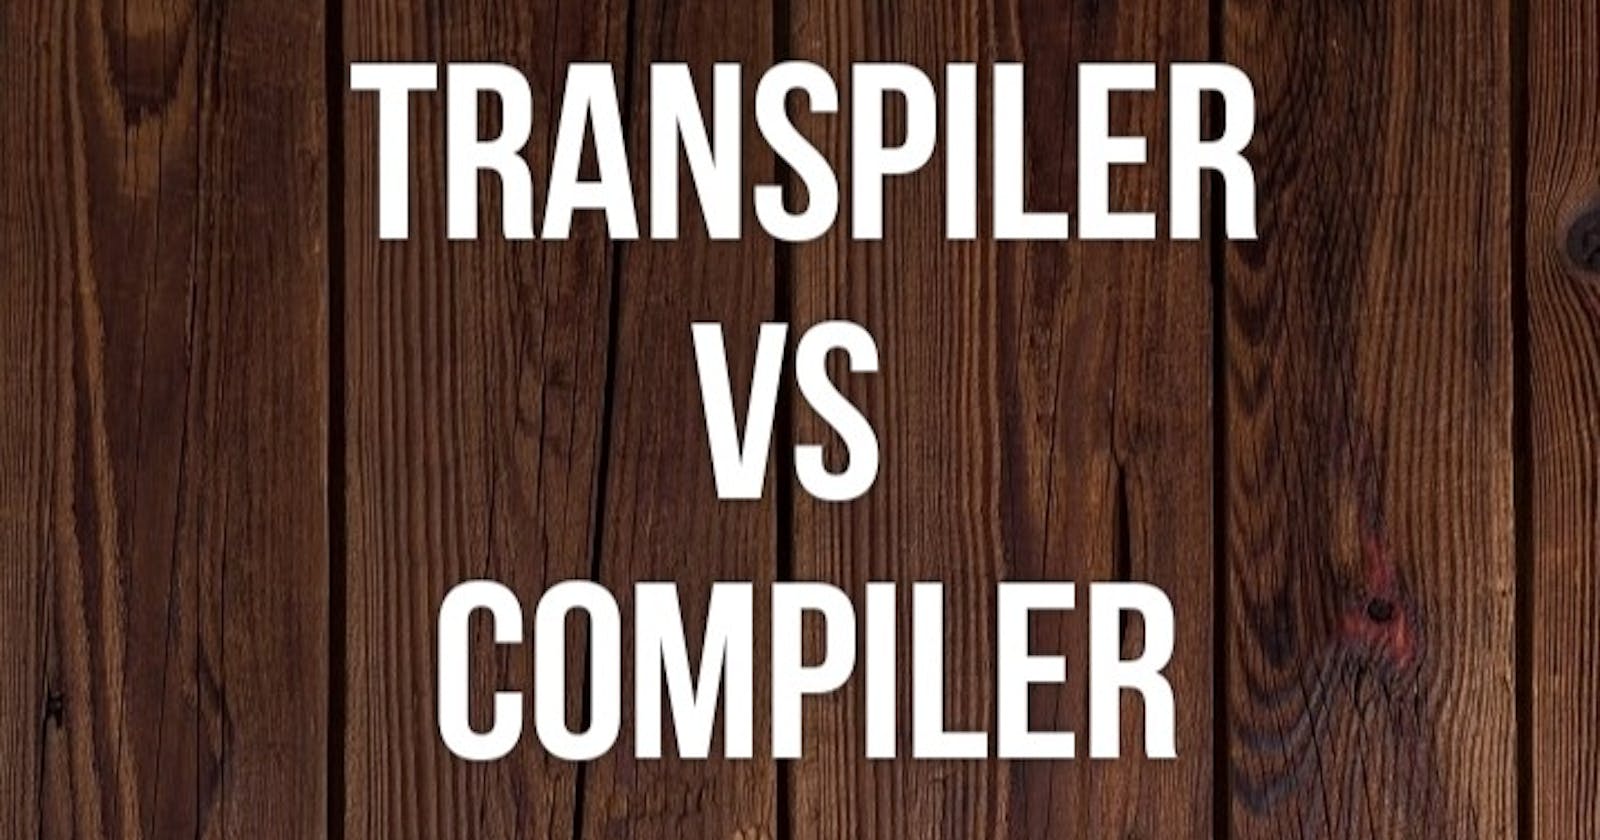 Transpiler vs Compiler